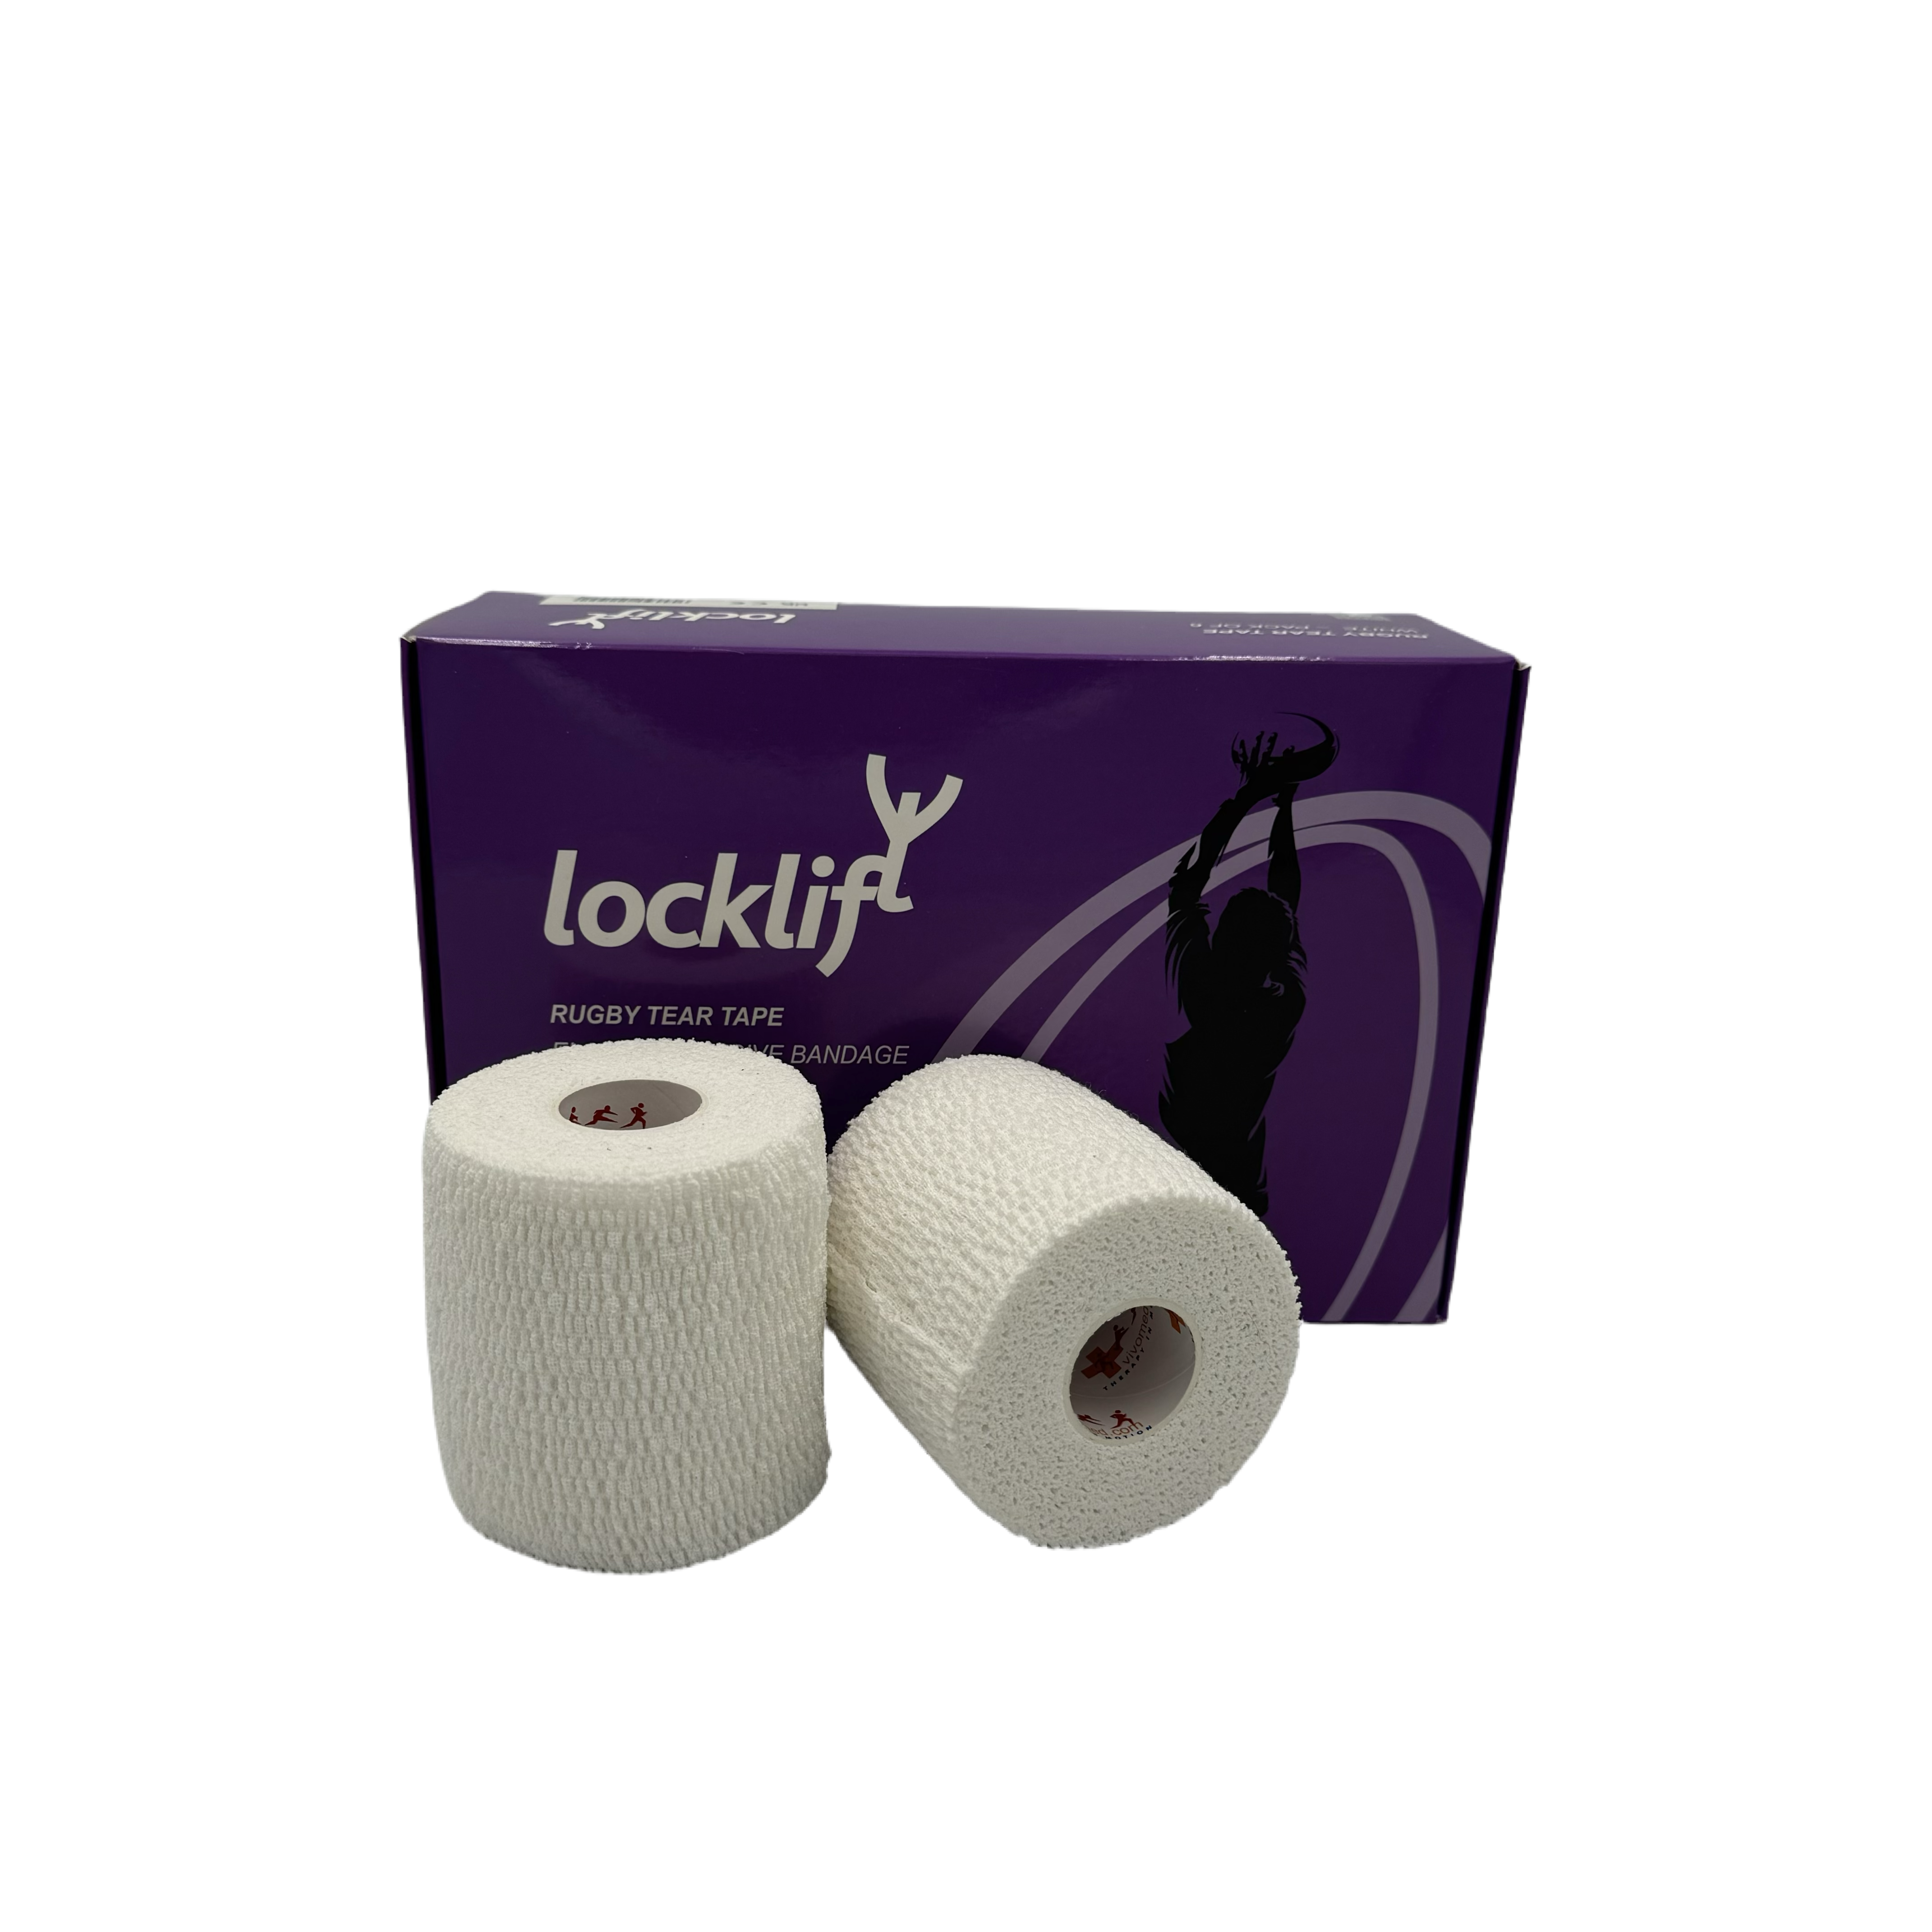 locklift tear tape - rugby thigh sport tape 7.5cms x 6.9m